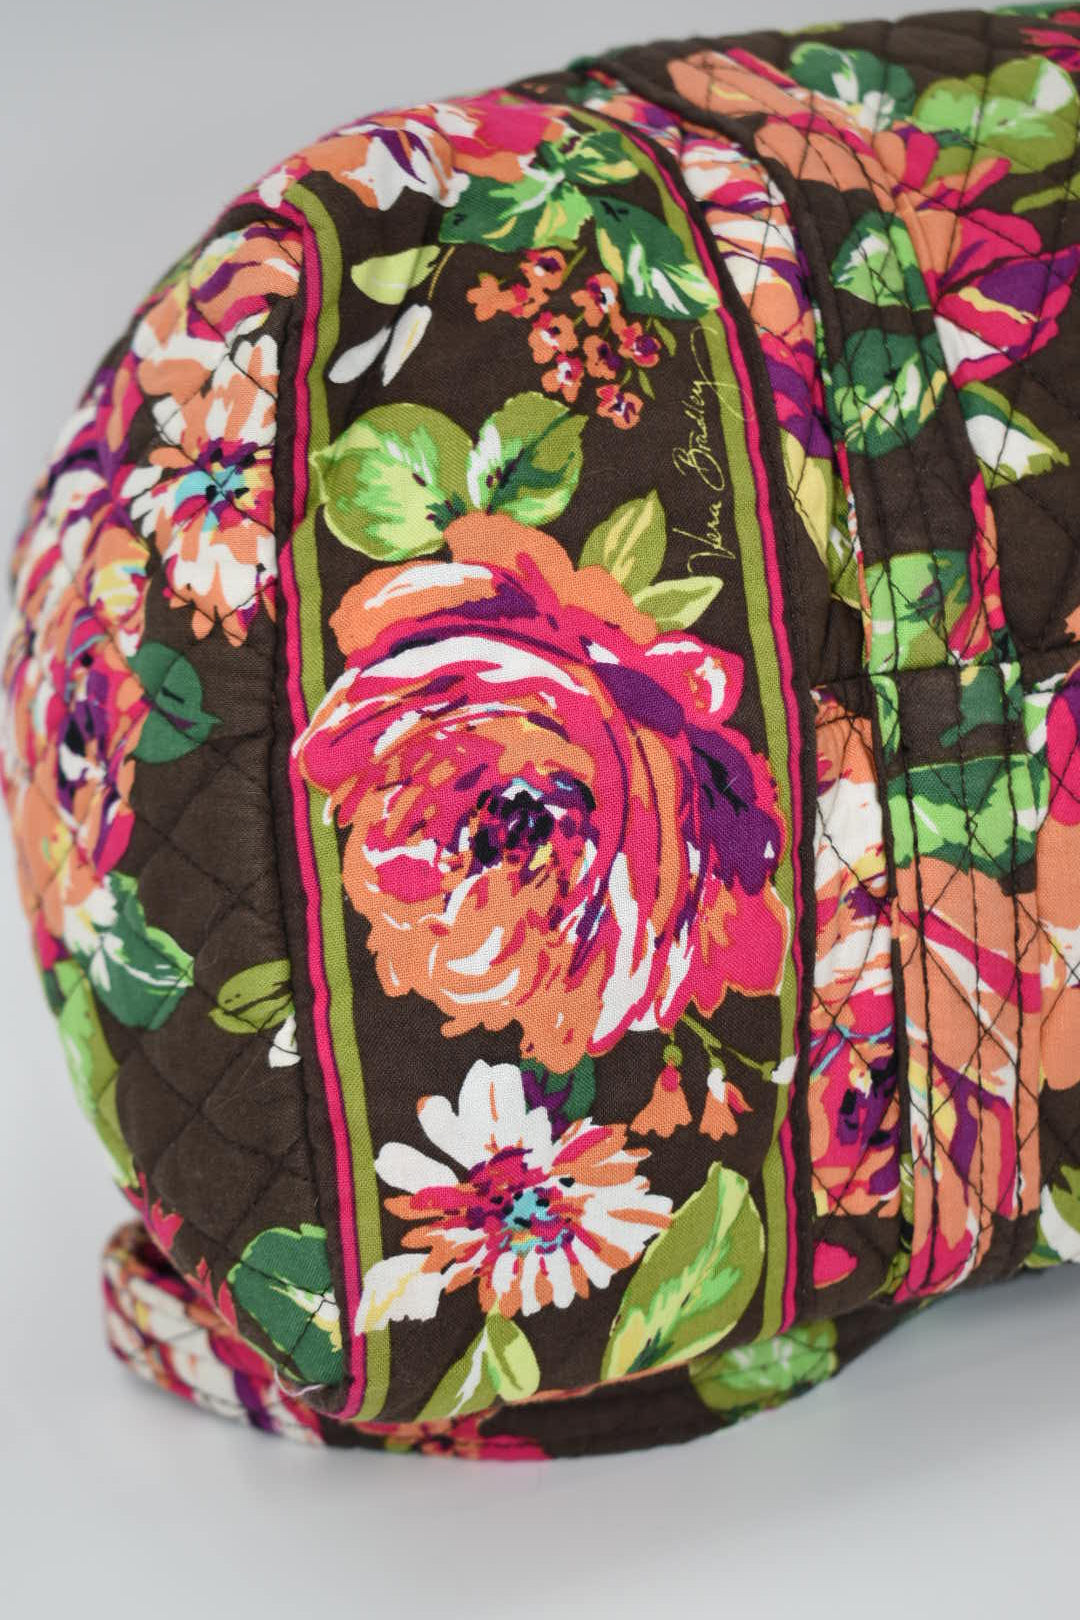 Vera Bradley Small Duffel Bag in "English Rose" Pattern